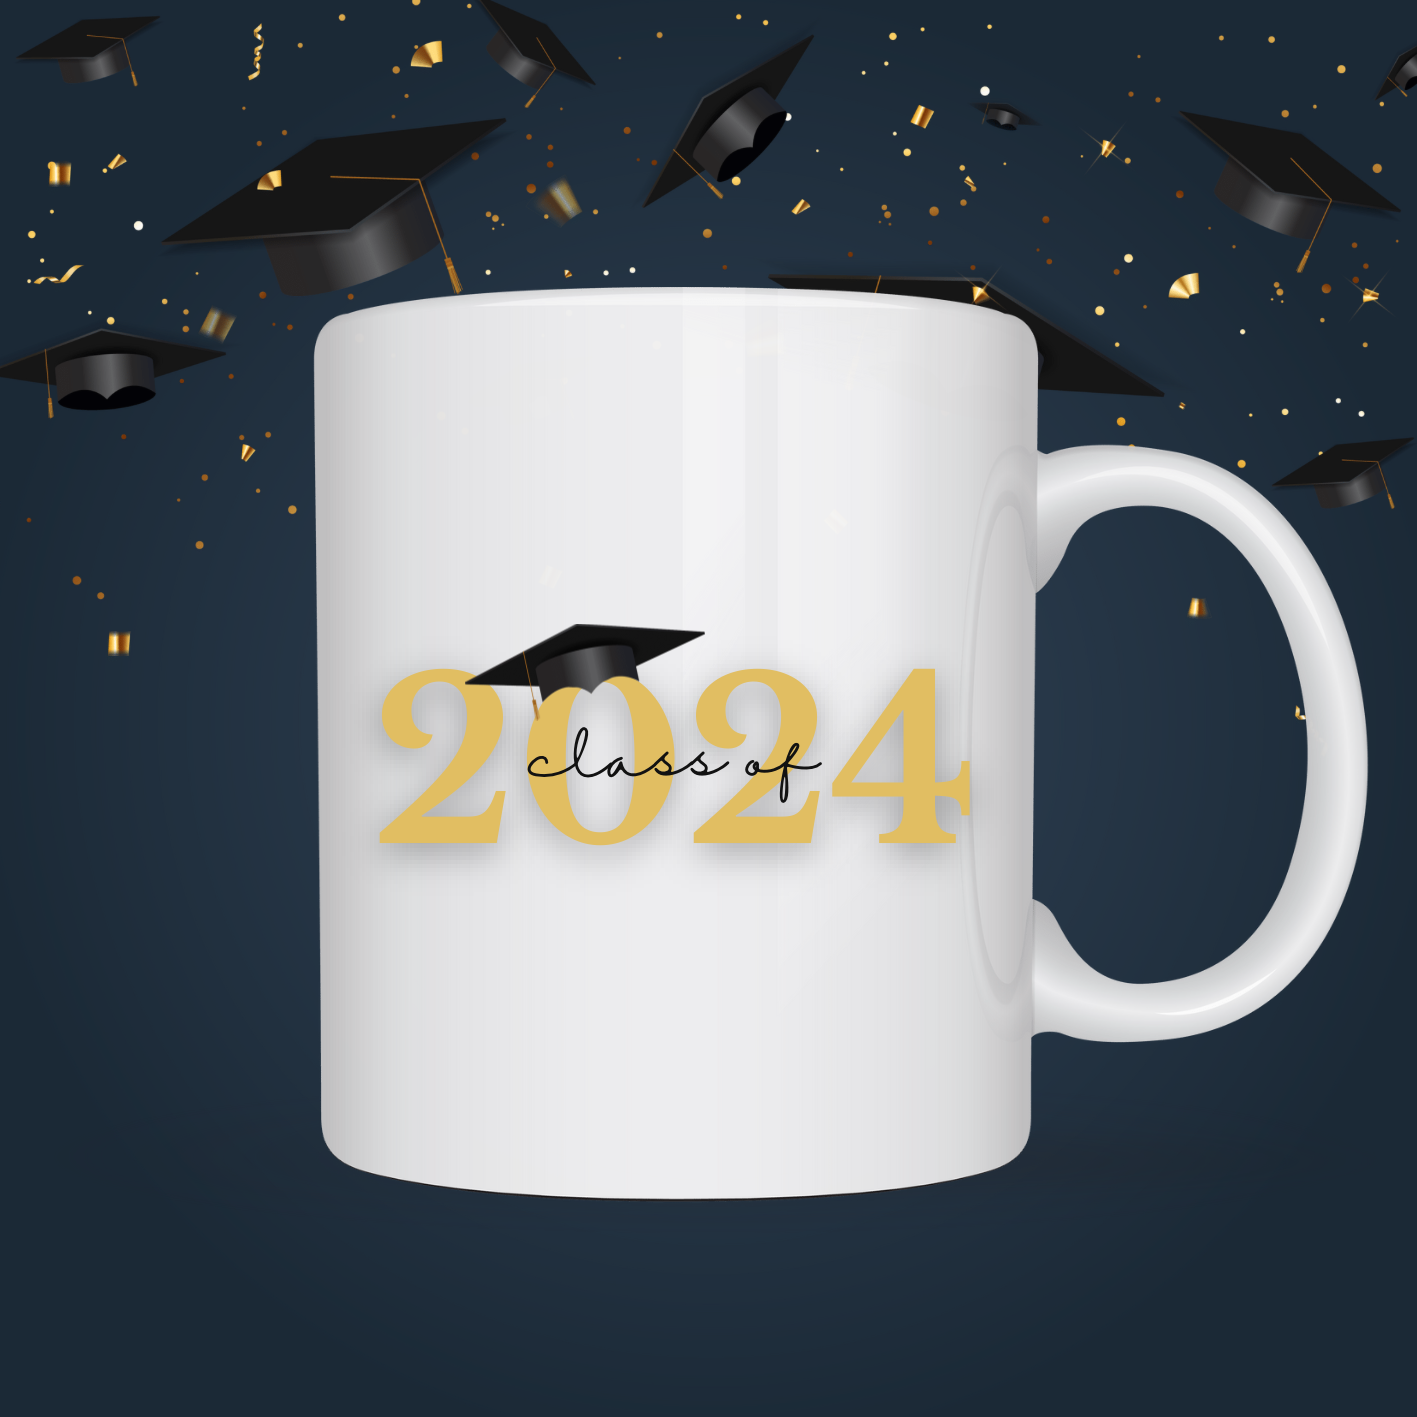 Class of 2024 mug